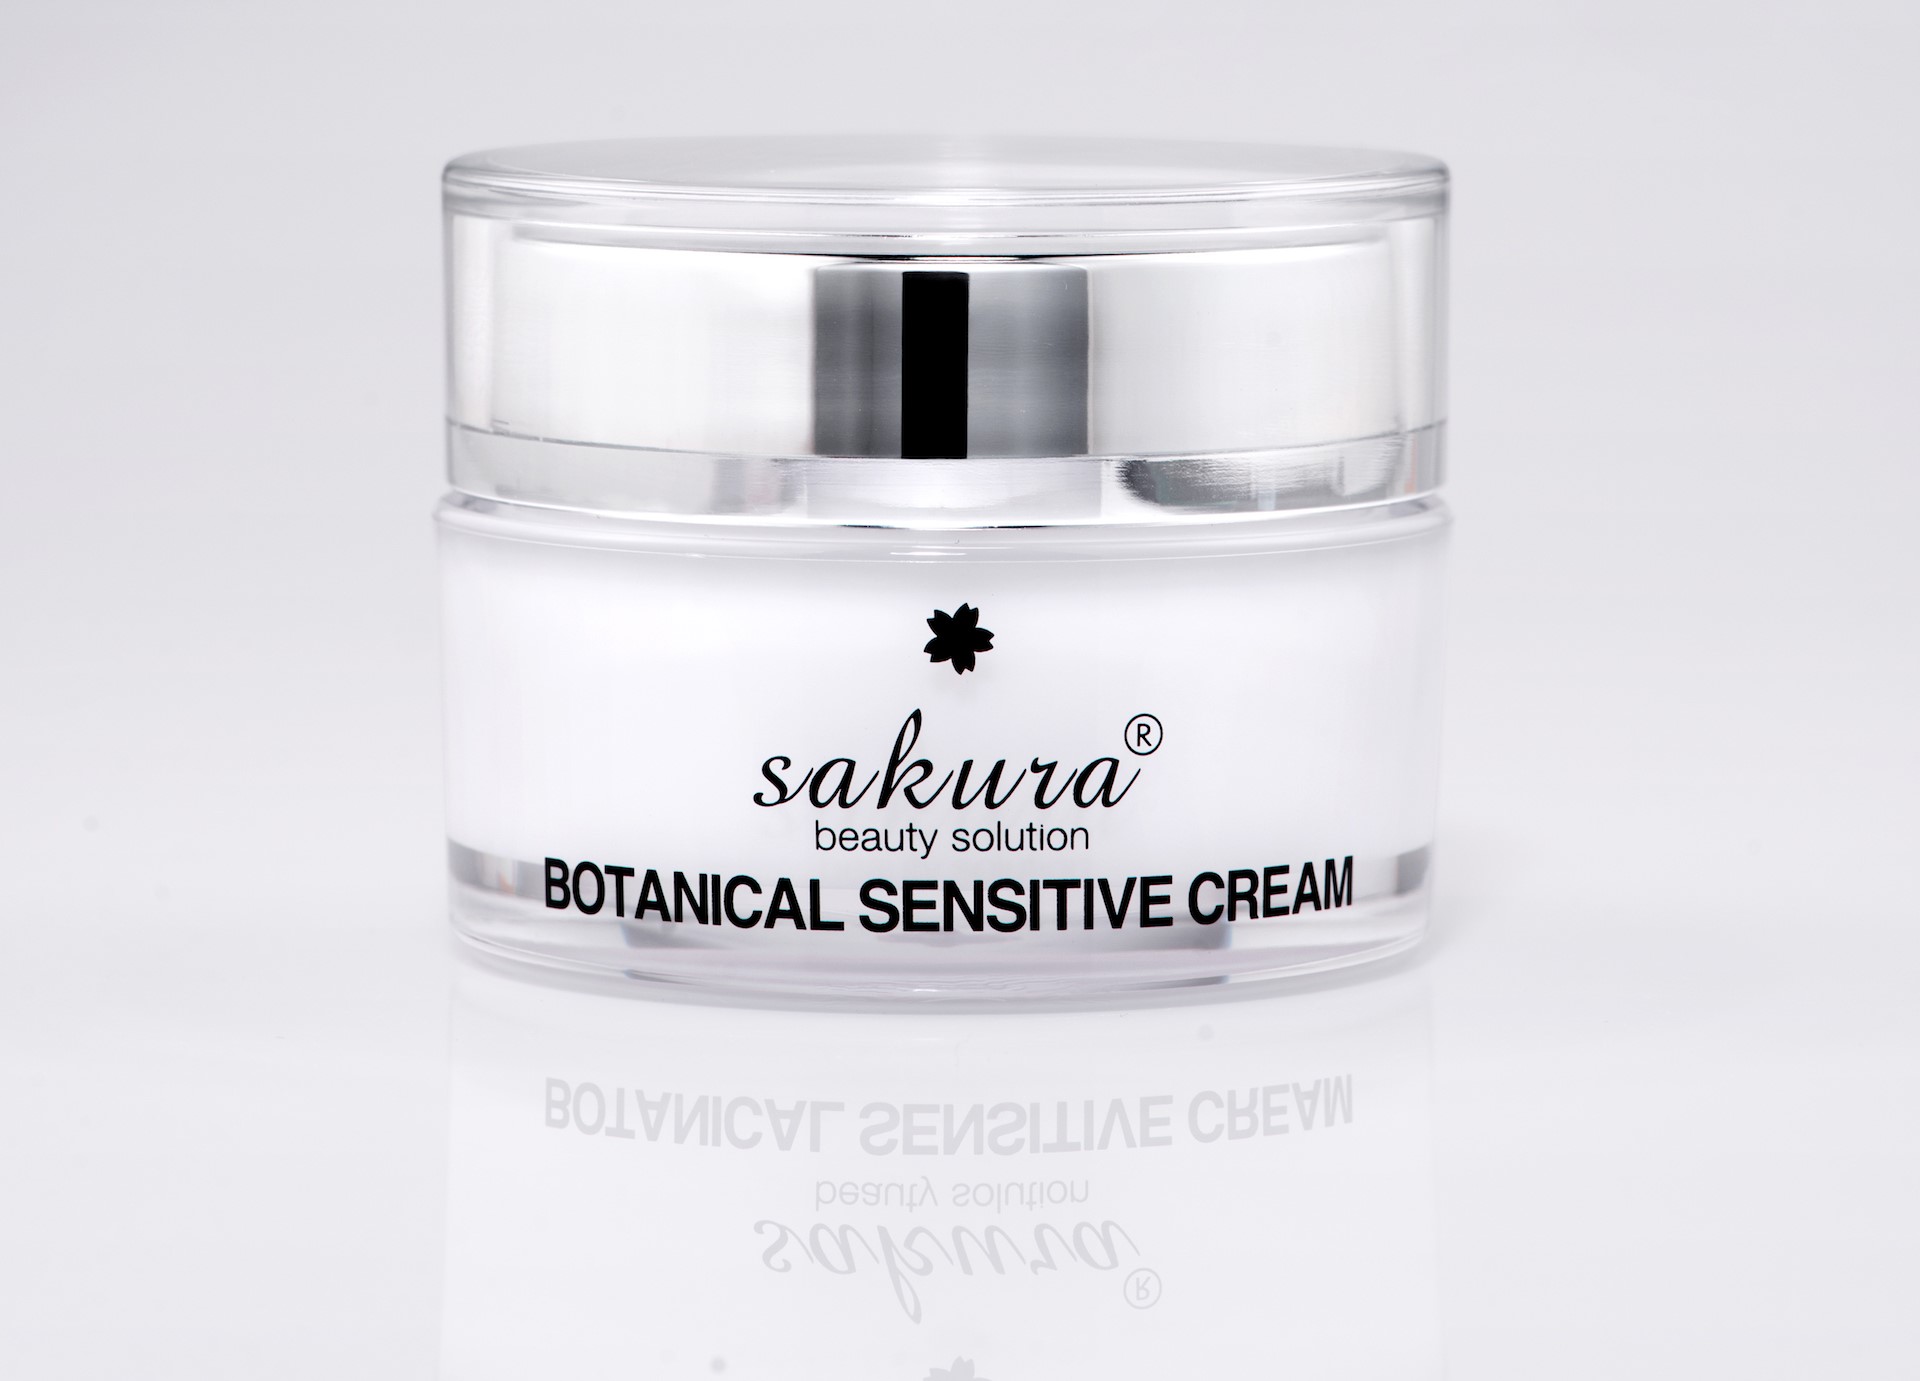 Sakura Botanical Sensitive Cream